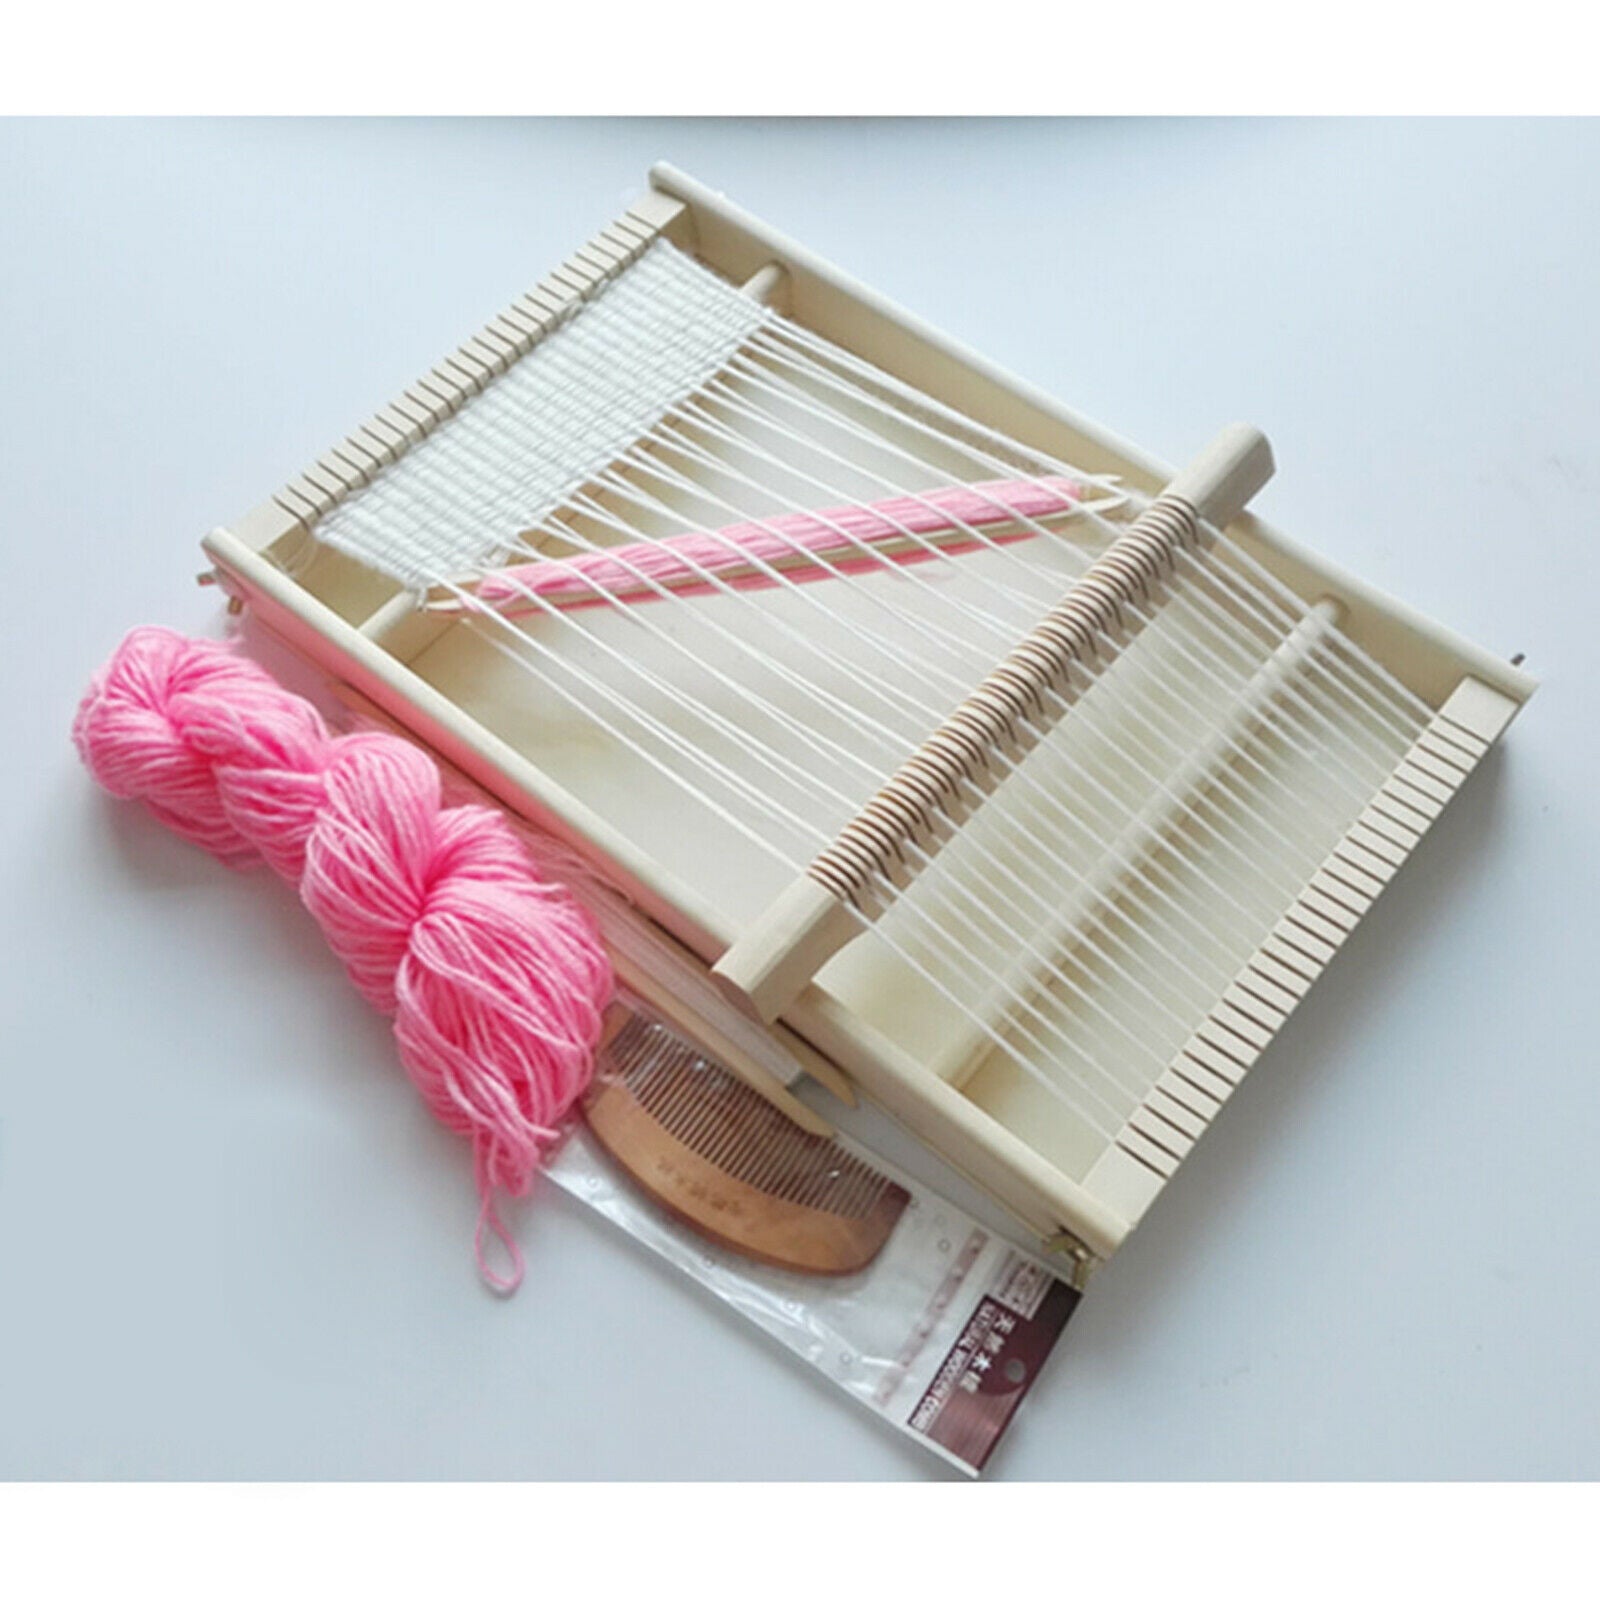 Handmade Traditional Wood Loom Weaving Knitting Kit Weaving Machine Toys Kids